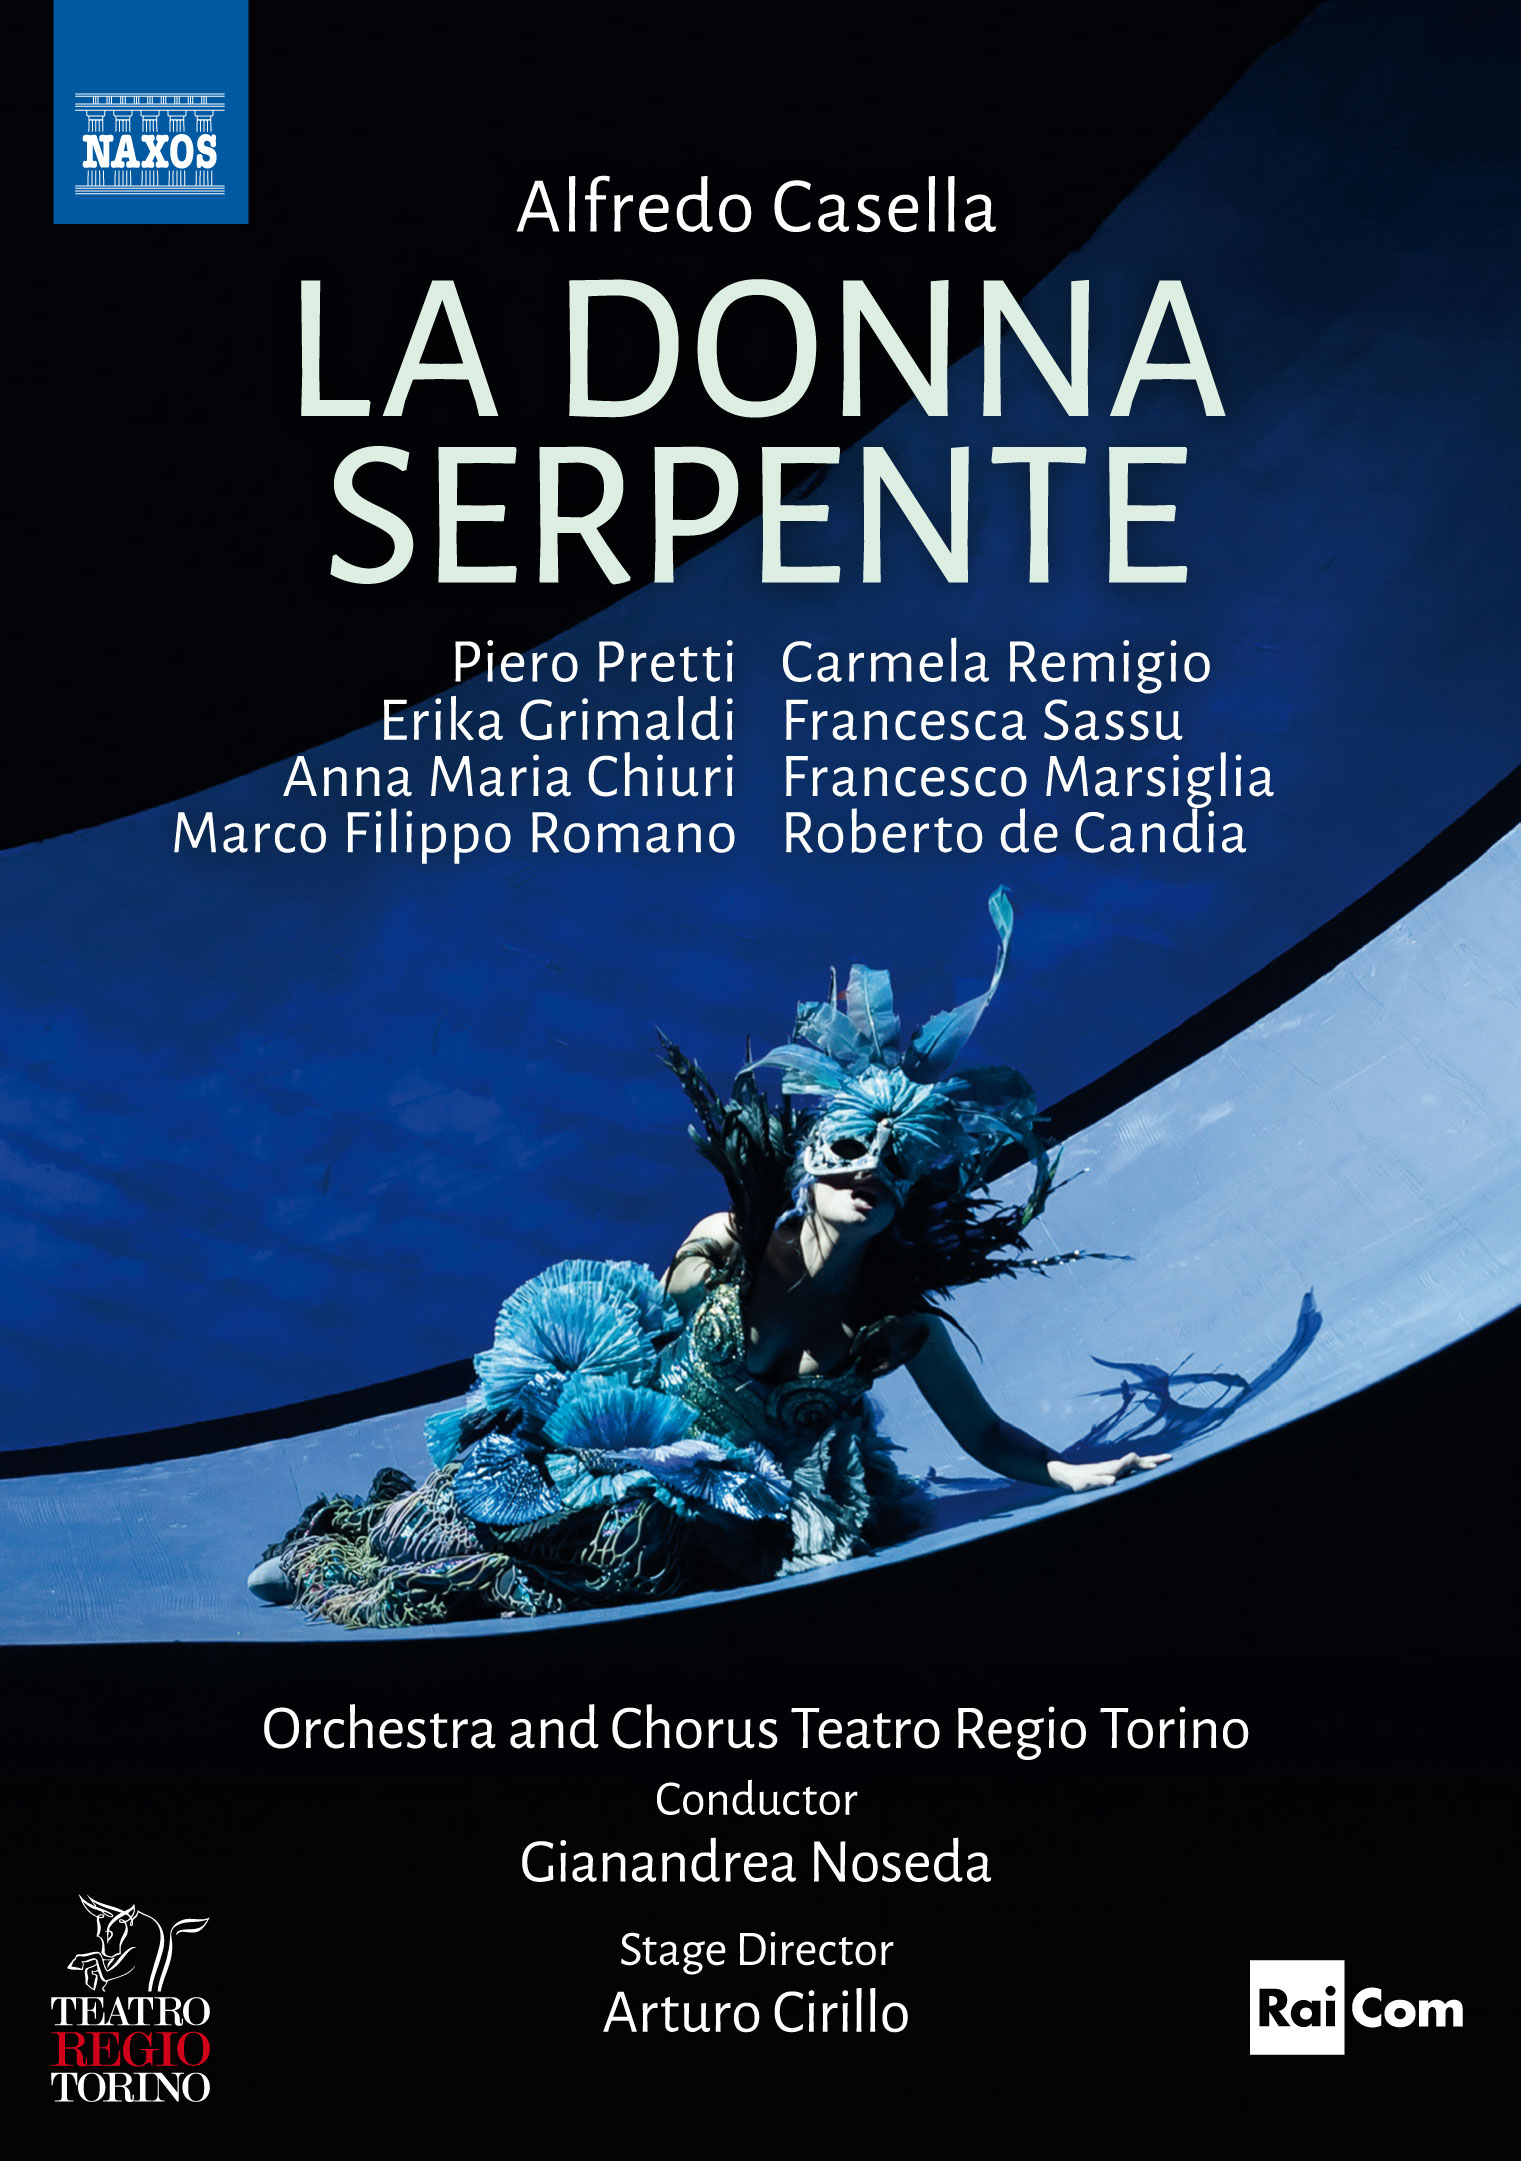 La donna serpente by Alfredo Casella - season 2015/2016